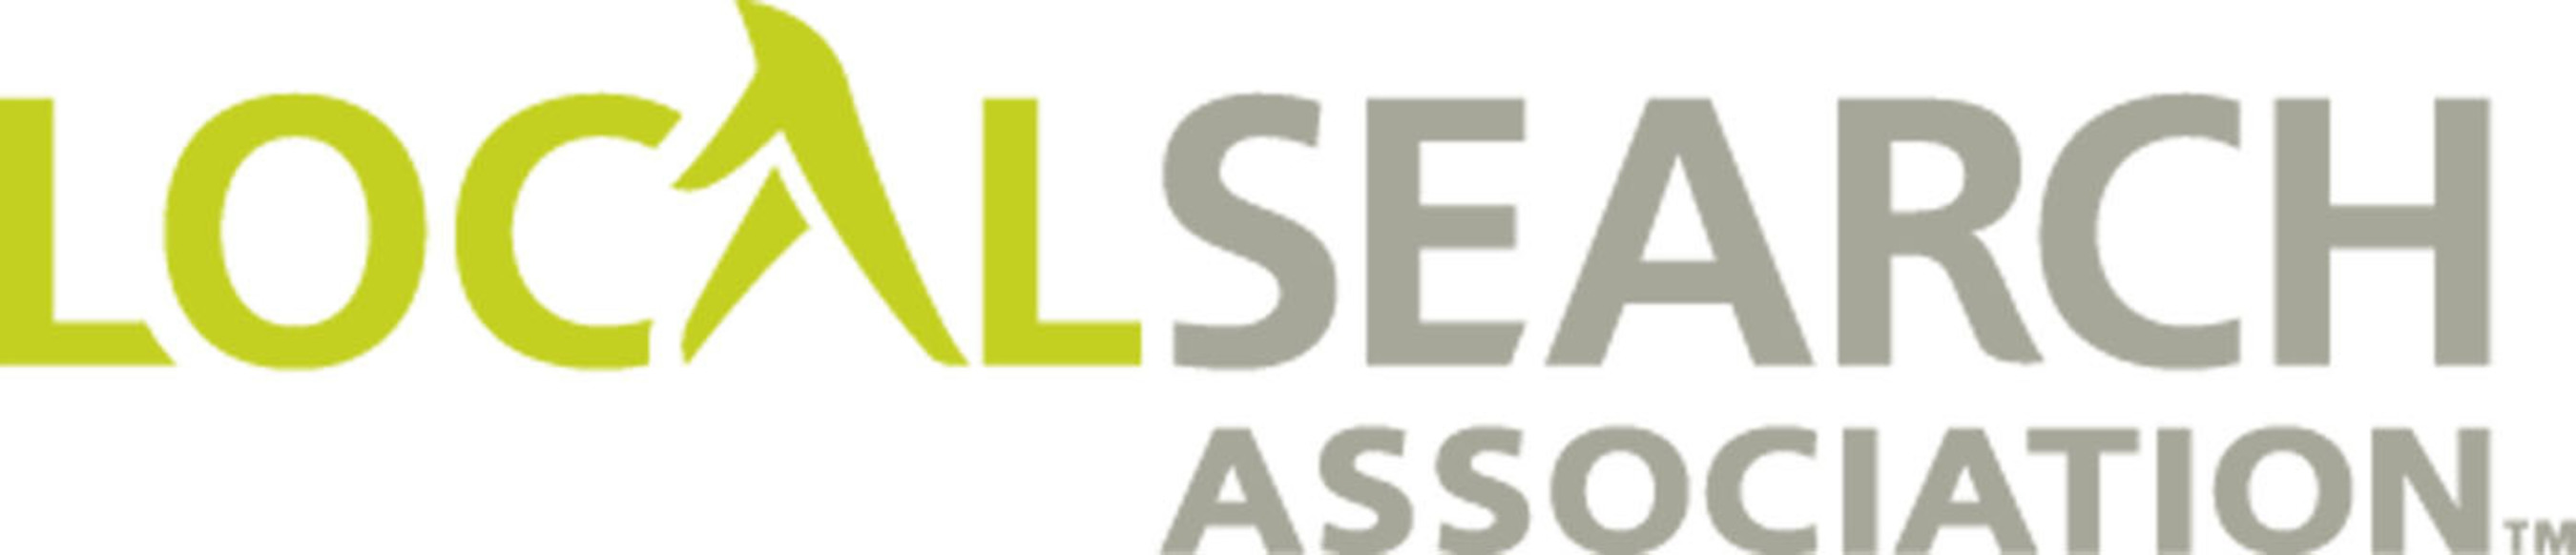 Local Search Association logo.